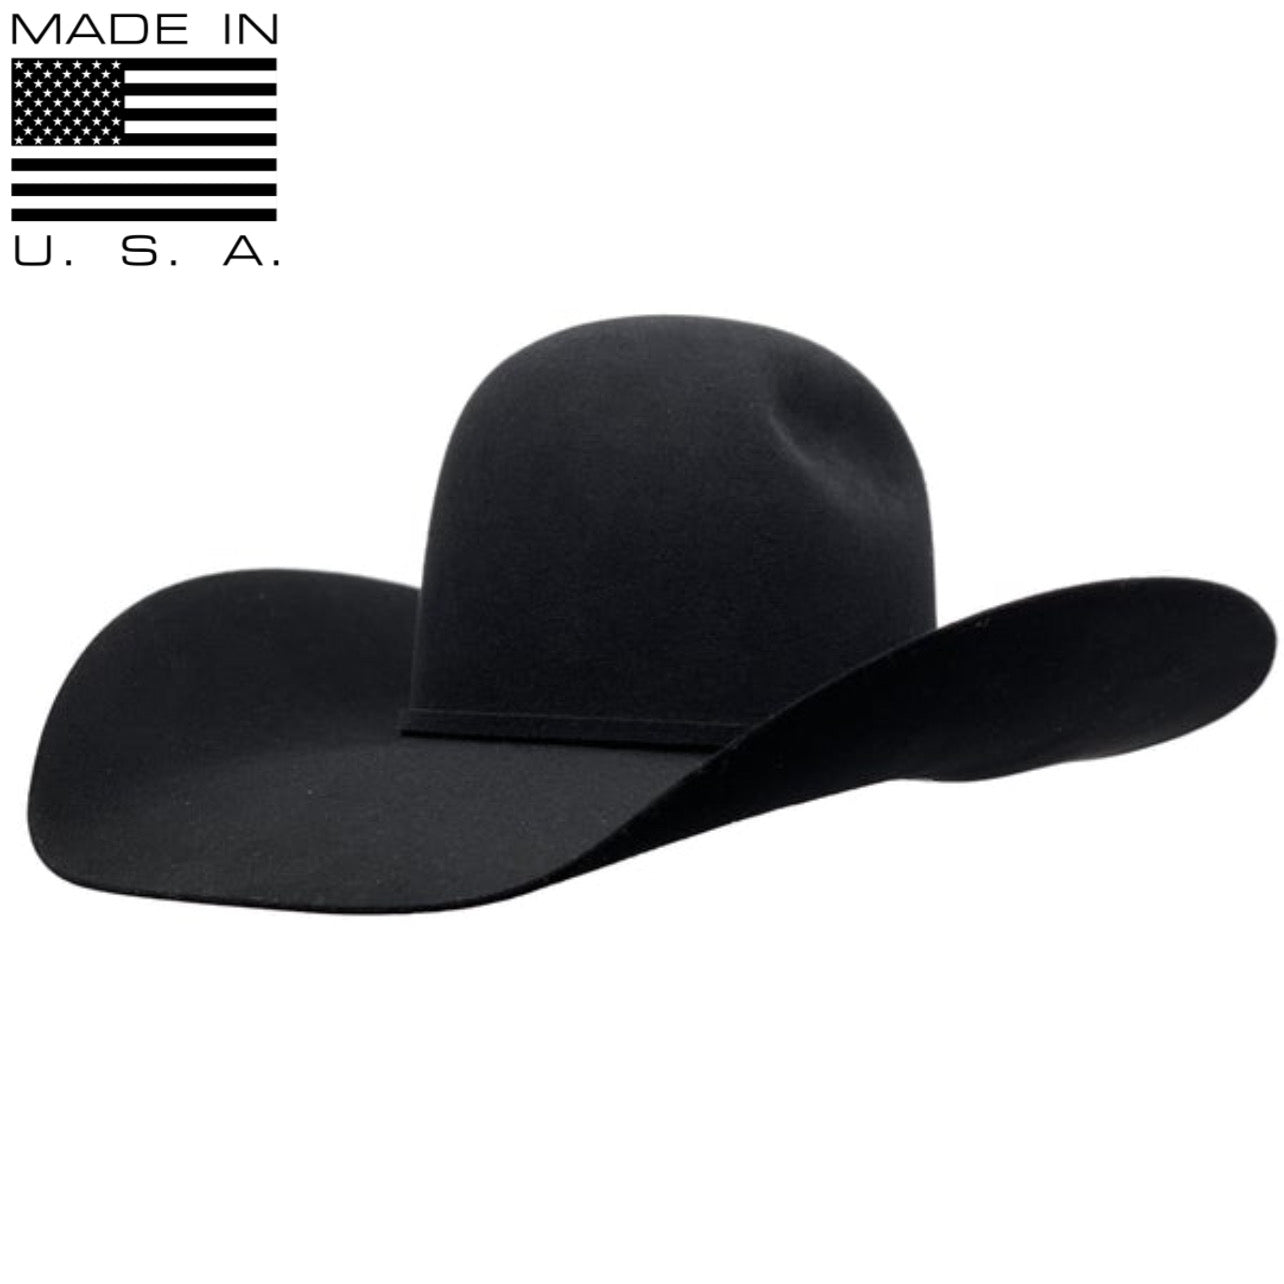 Rodeo King Black Felt Cowboy Hat (5 Brim)